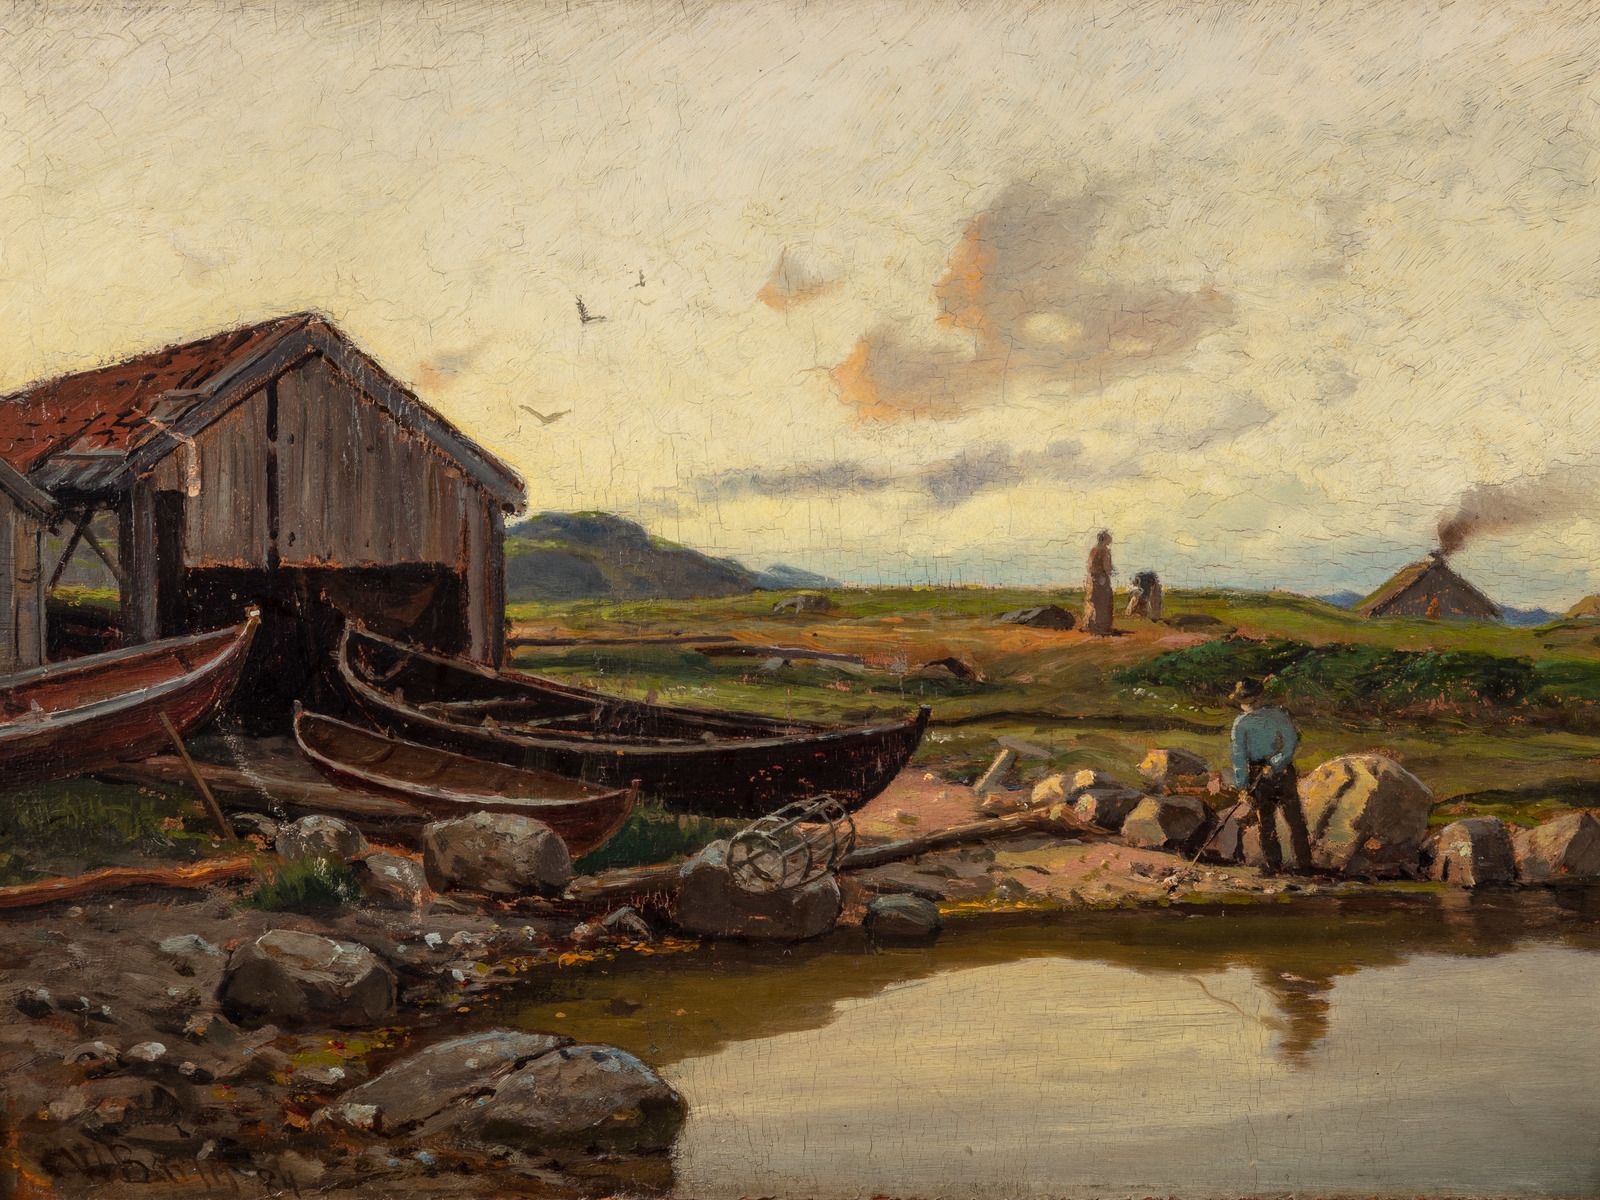 Naust med båter by Carl Wilhelm Barth, 1884